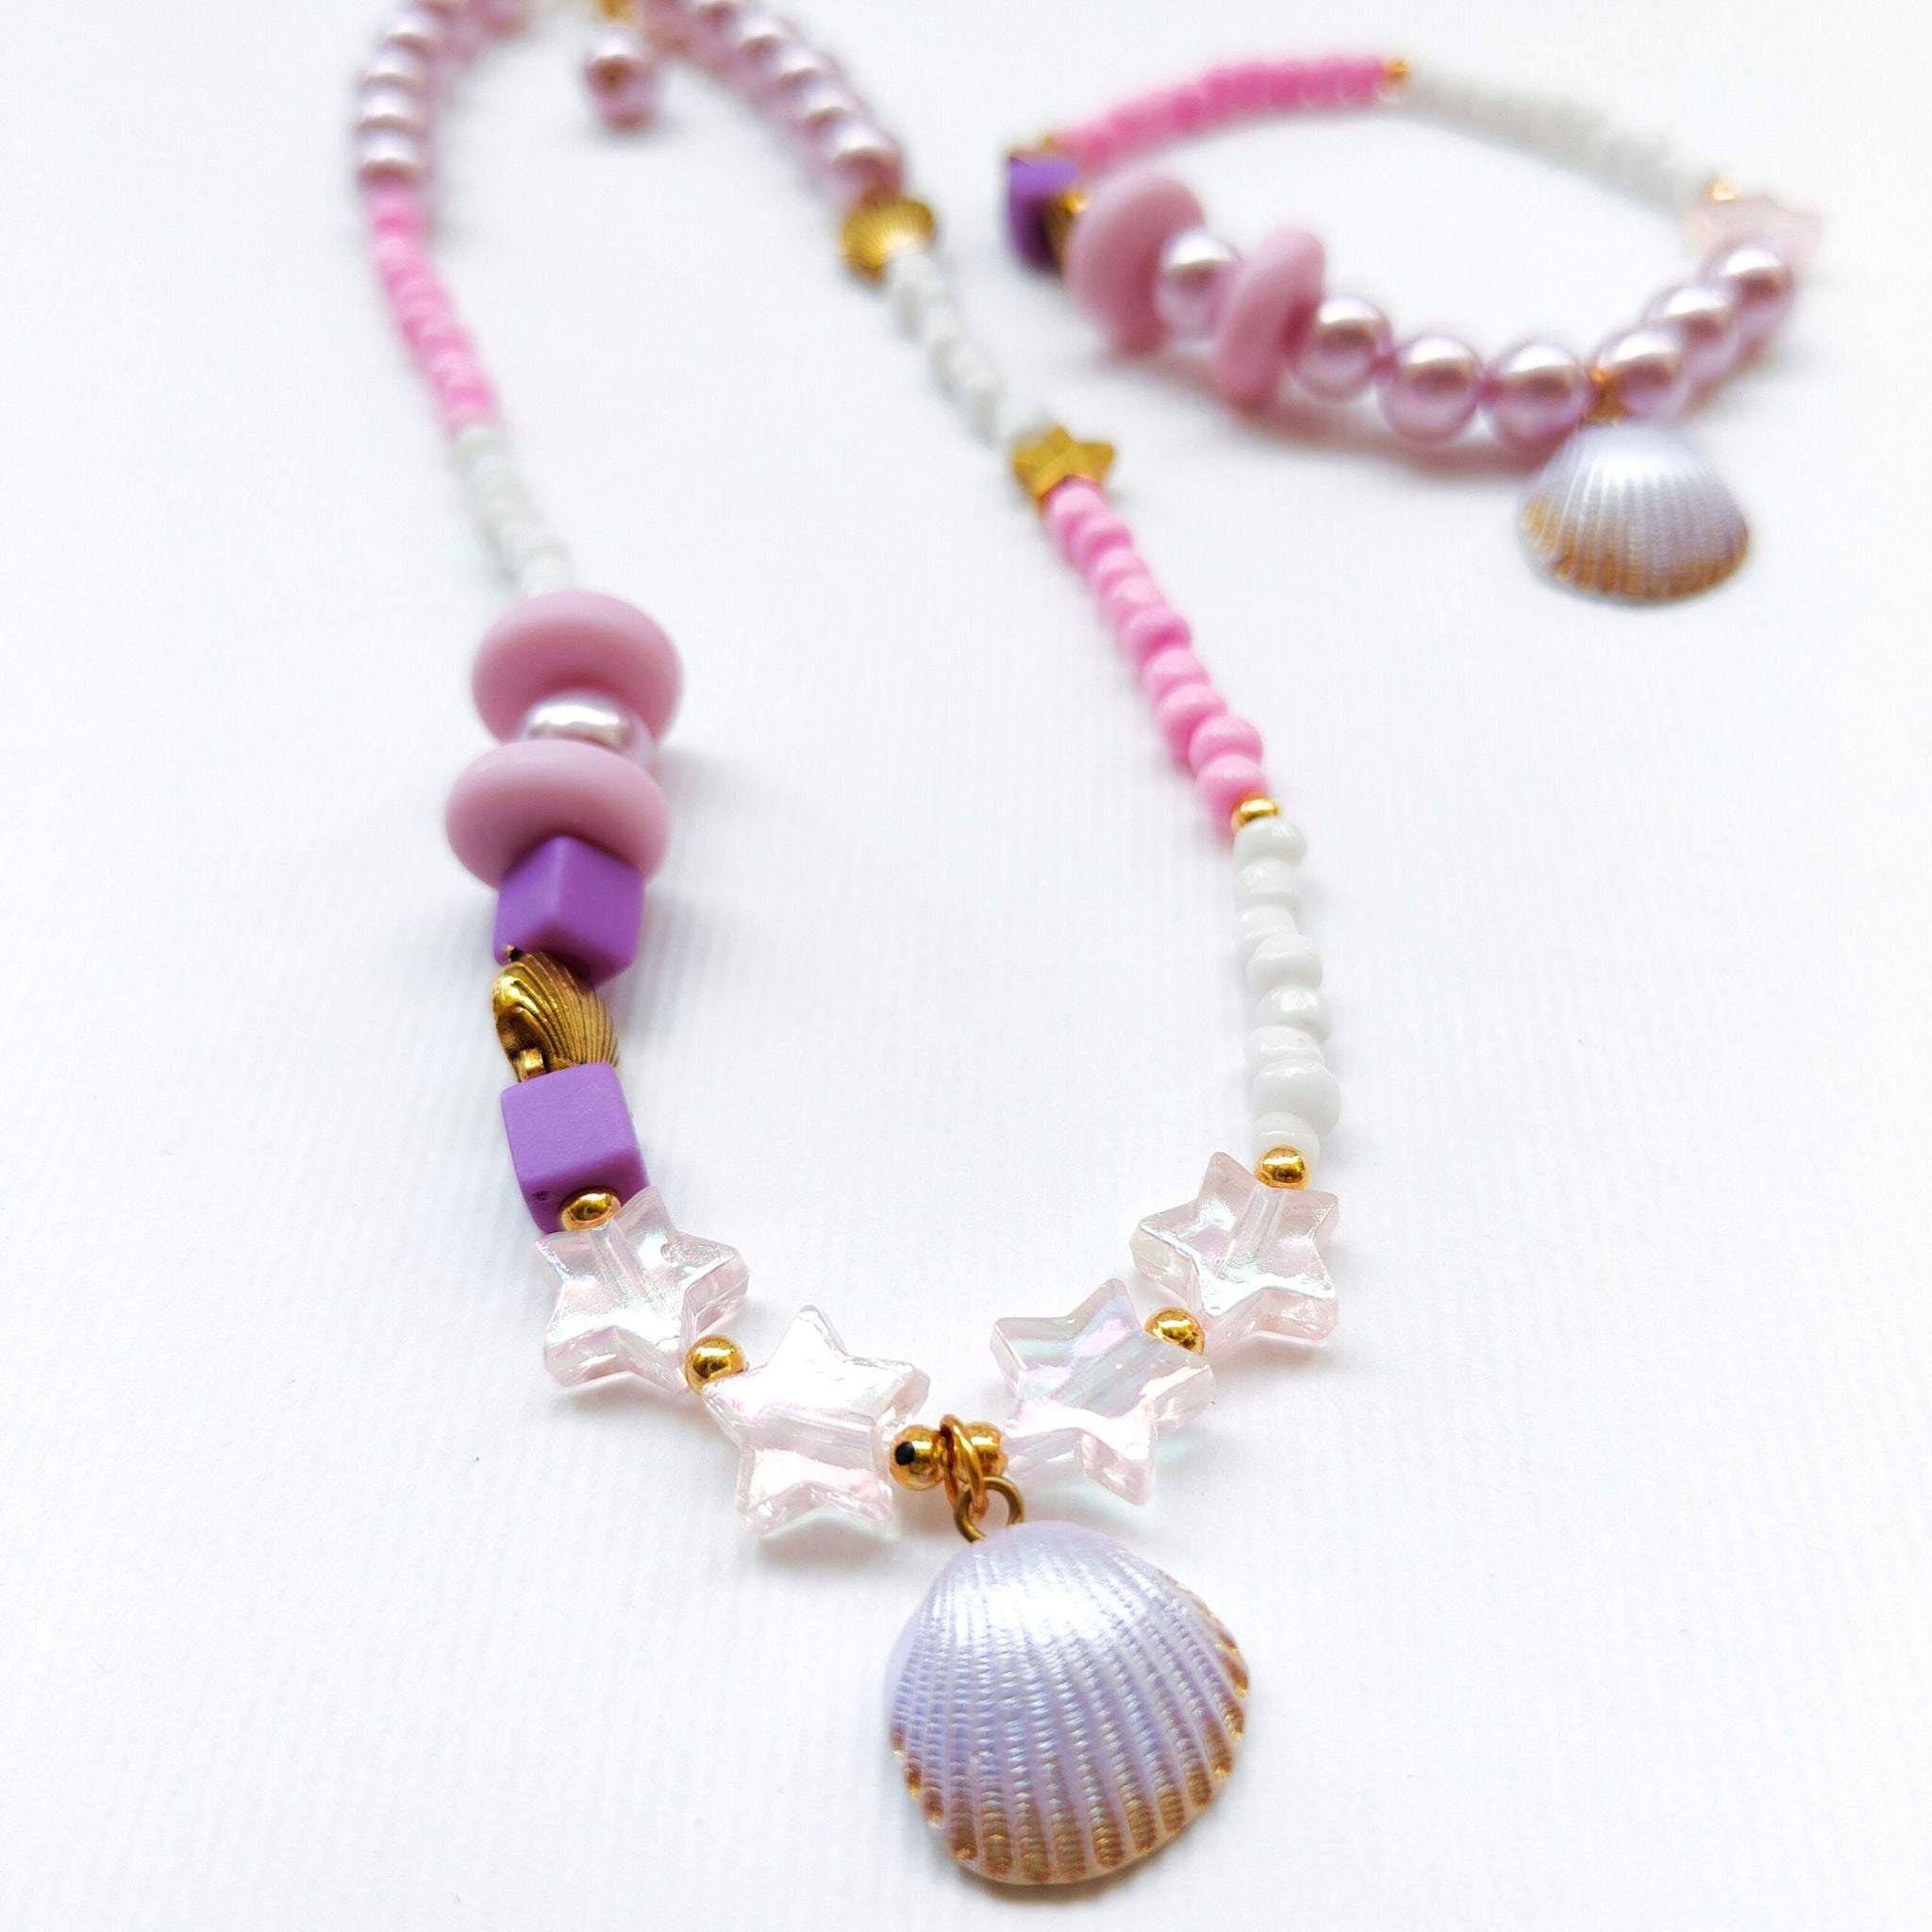 Seahells & Pearls Necklace Bracelet Set